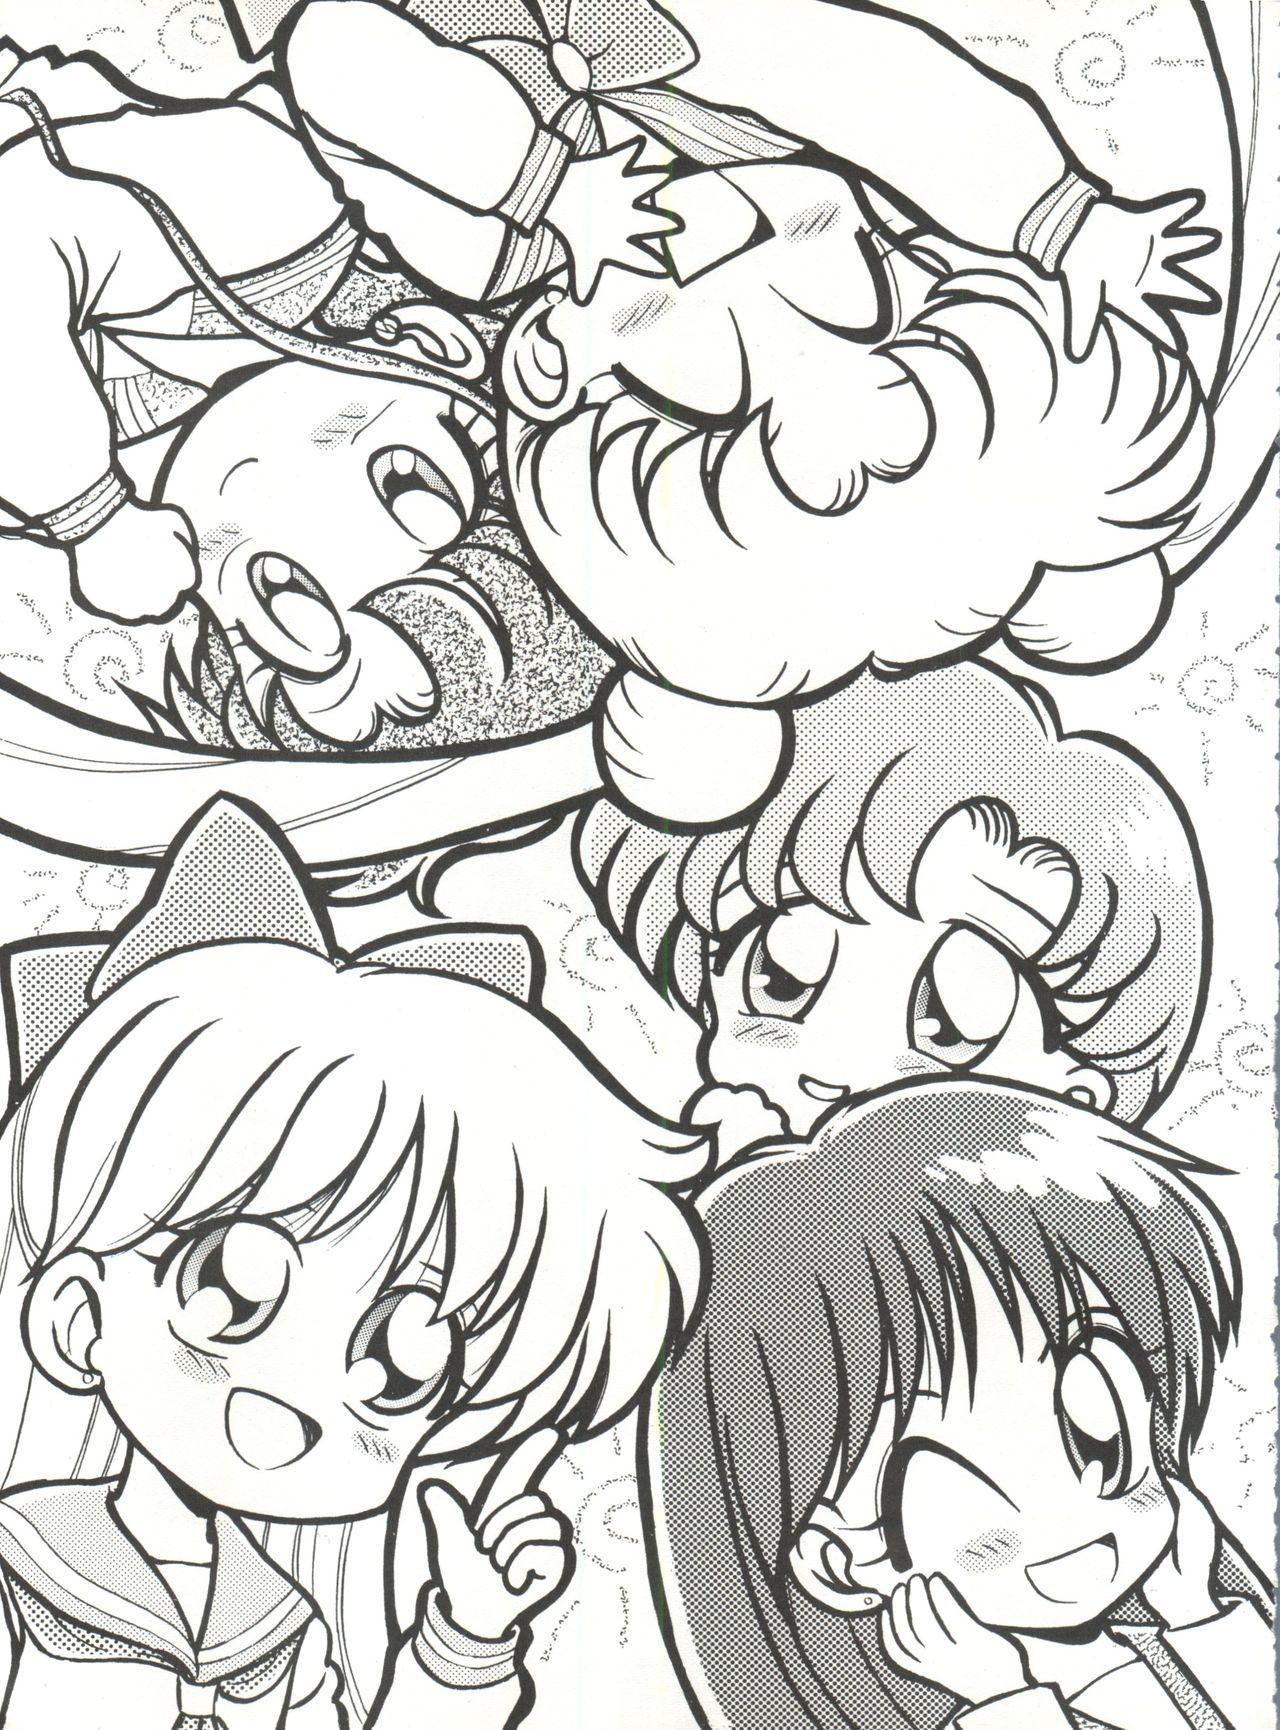 Ecchi Gekkou 4 - Sailor moon Sex Toys - Page 4